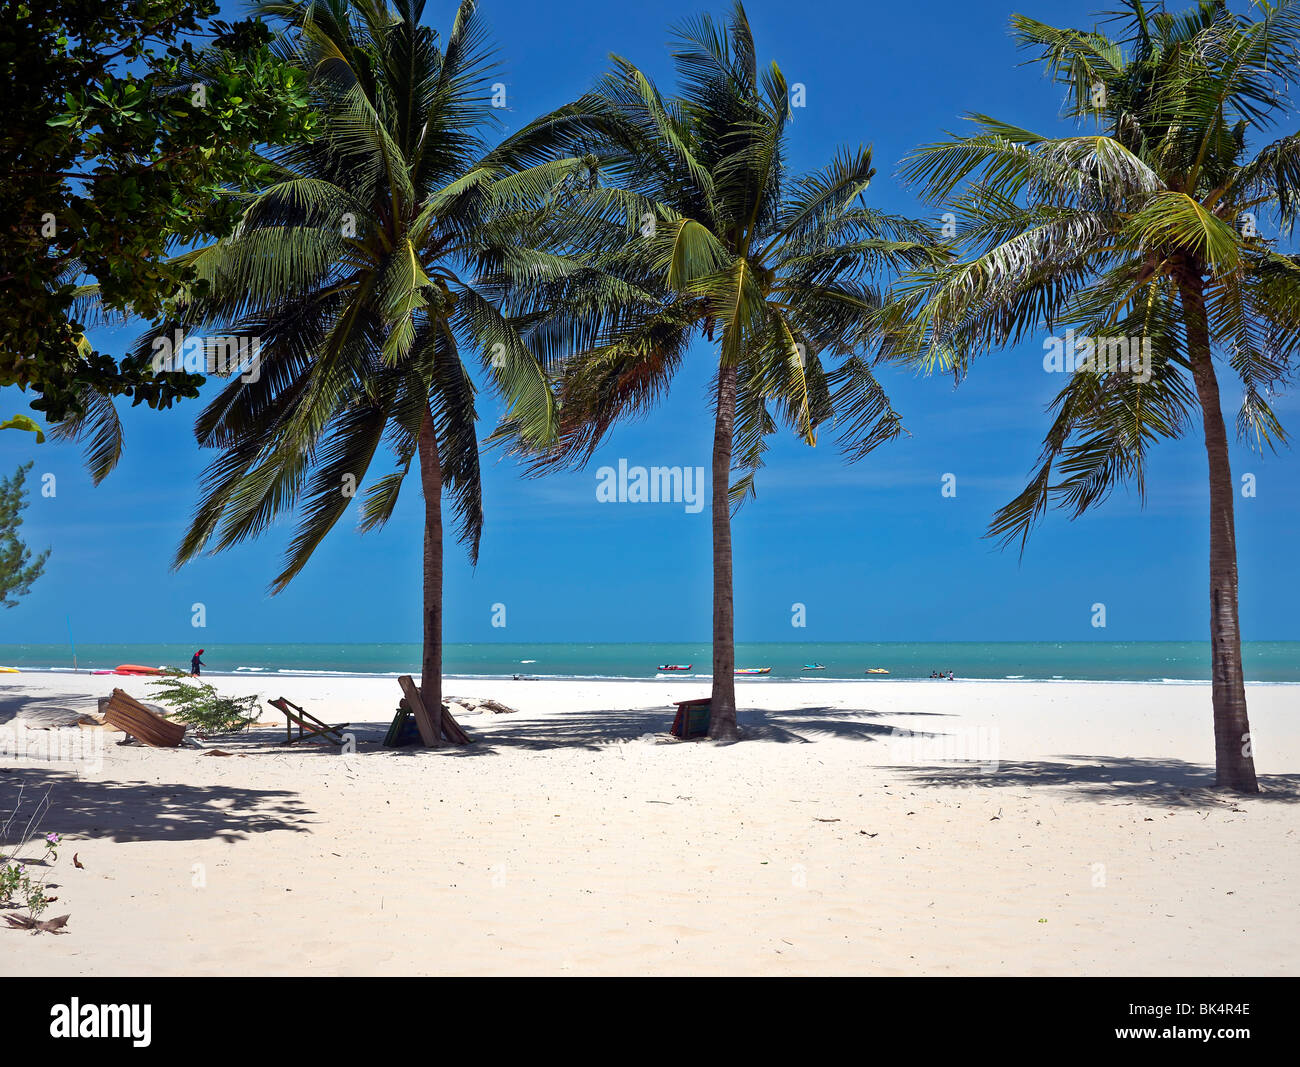 Thailand unspoilt and deserted tropical beach with palm trees and white sand. Khao Kalok, Hua Hin, Pranburi, Thailand, Asia Stock Photo